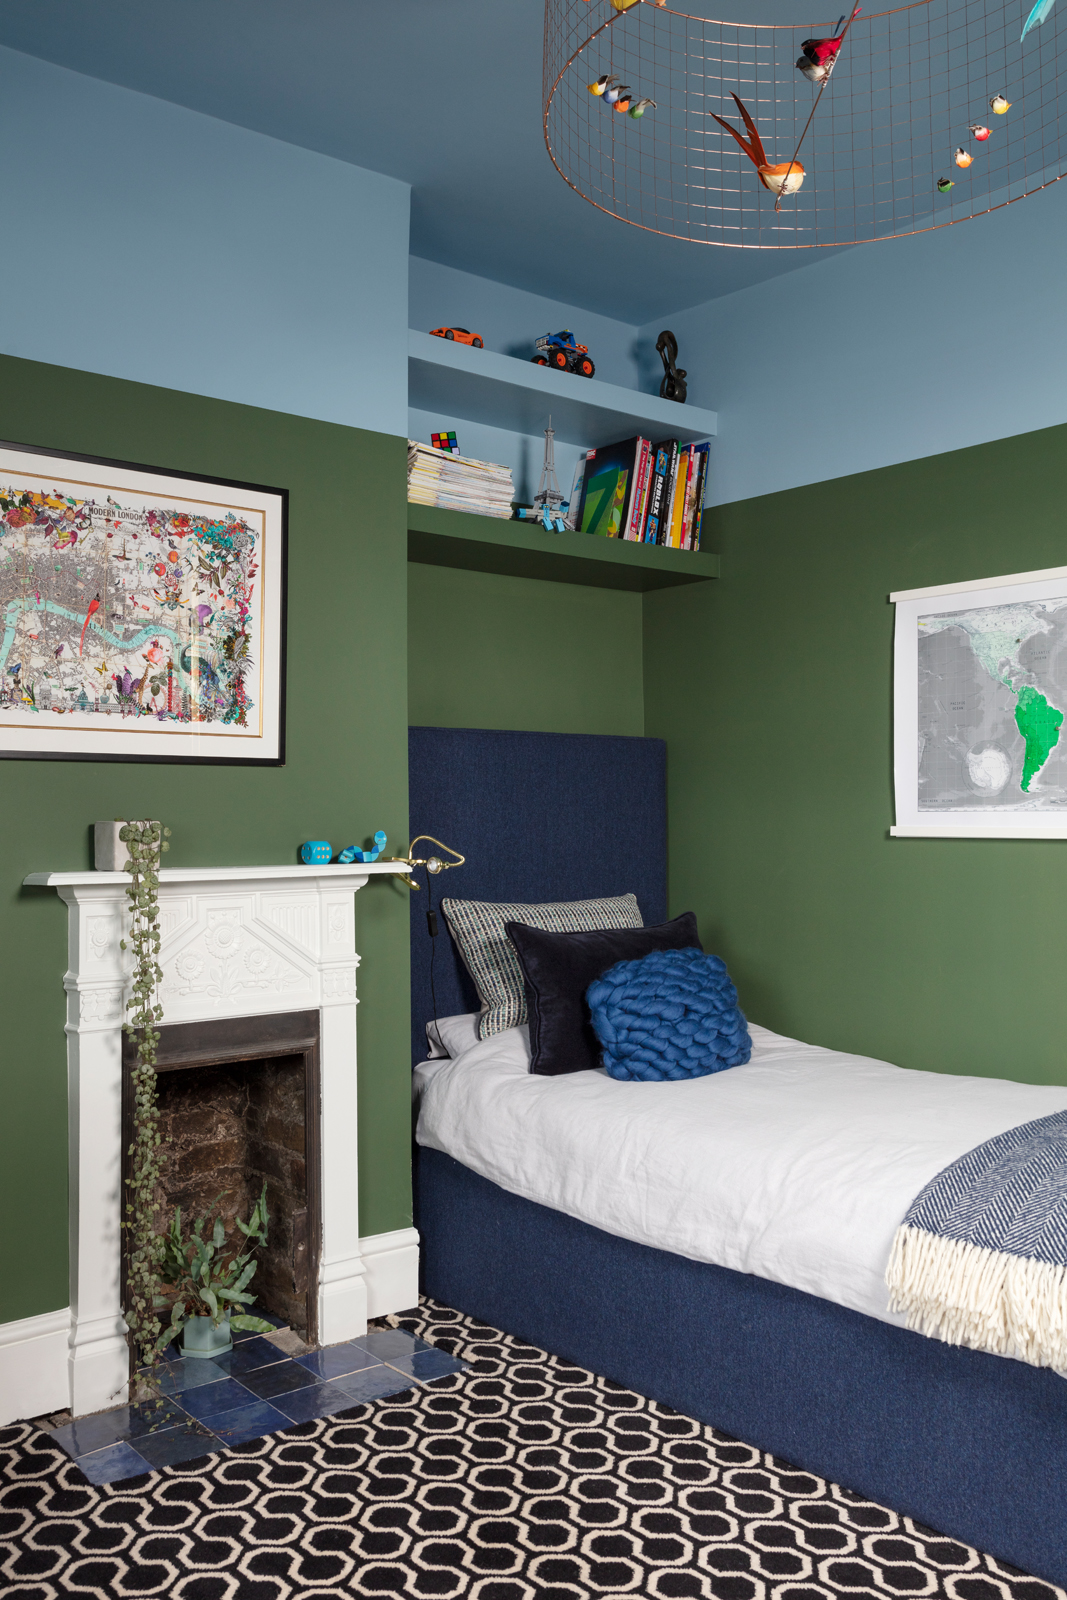 Sofa.com upholstered dark blue headboard in a boy's room